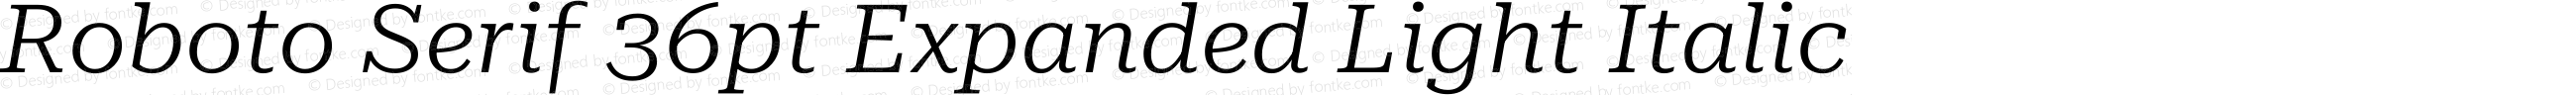 Roboto Serif 36pt Expanded Light Italic